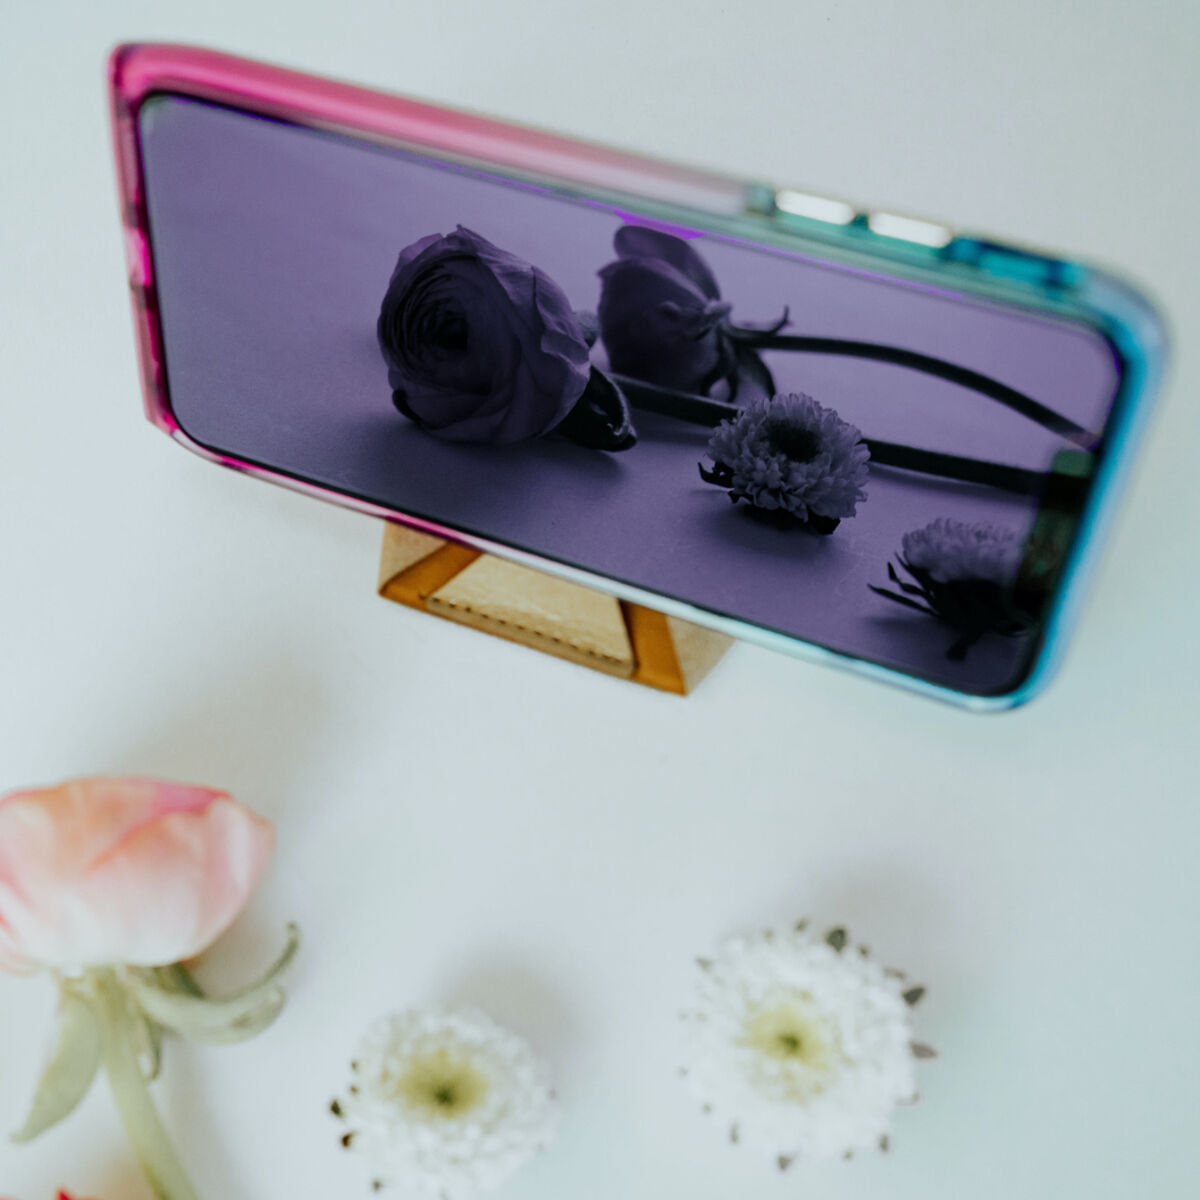 Mirror Glass - Dusk (Blue/Purple) - Apple iPhone 12 Mini